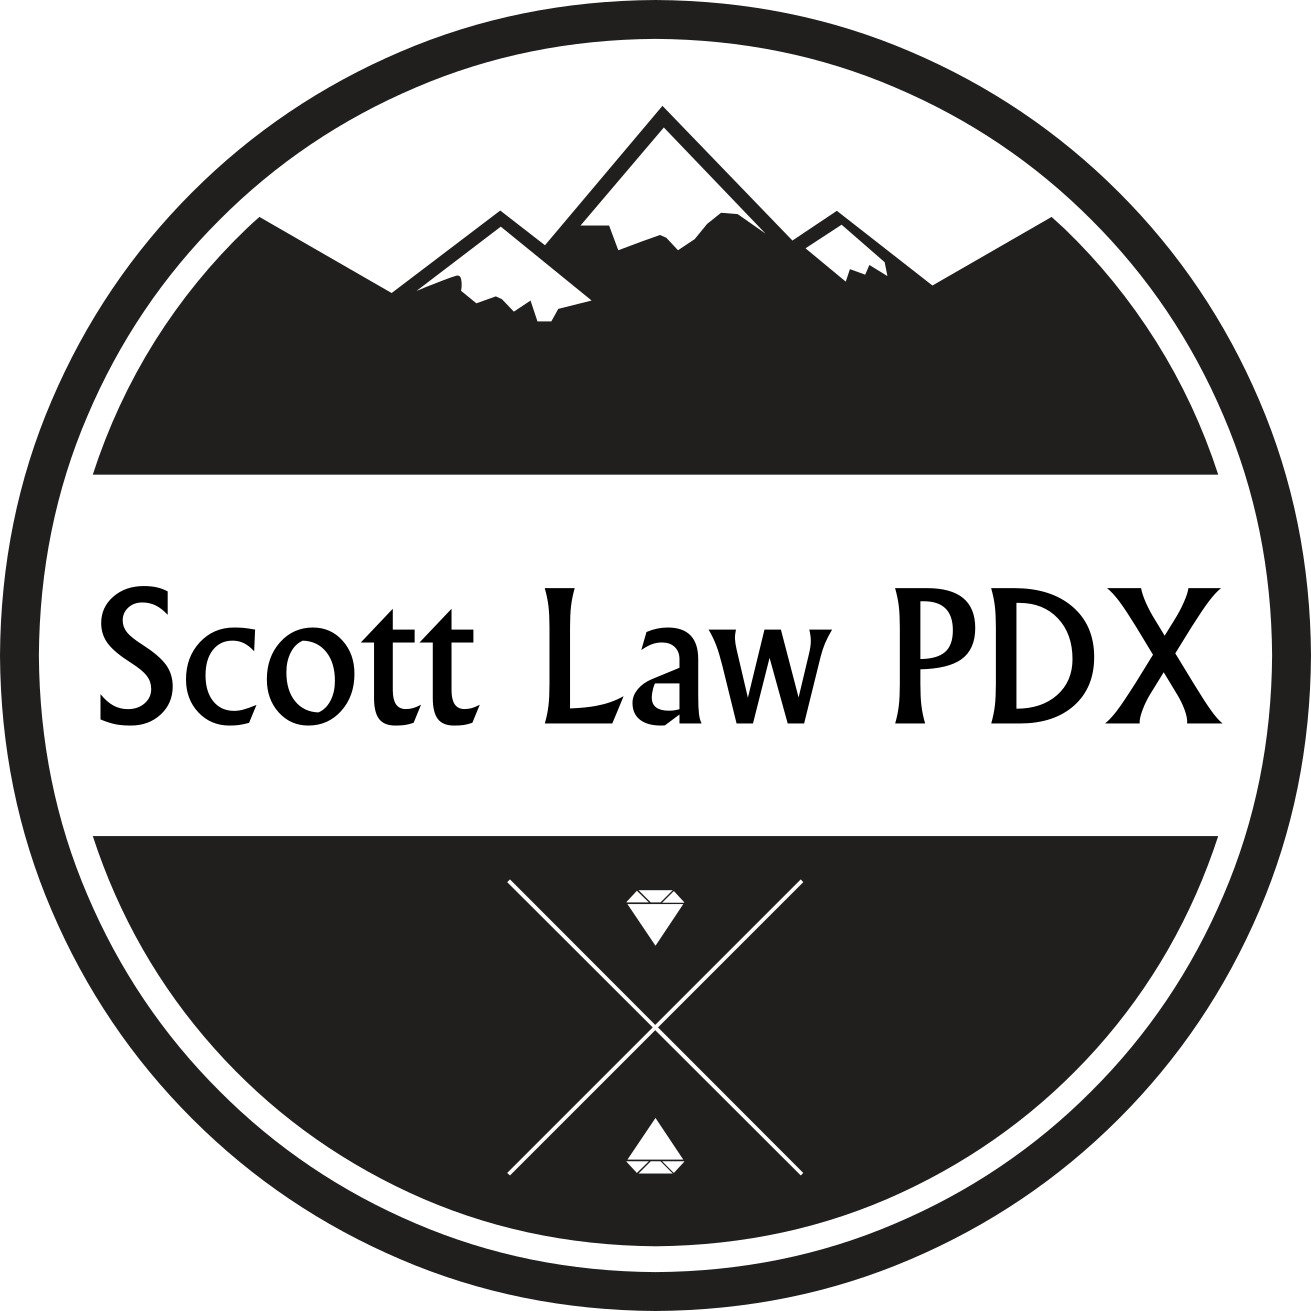 SCOTT LAW PDX